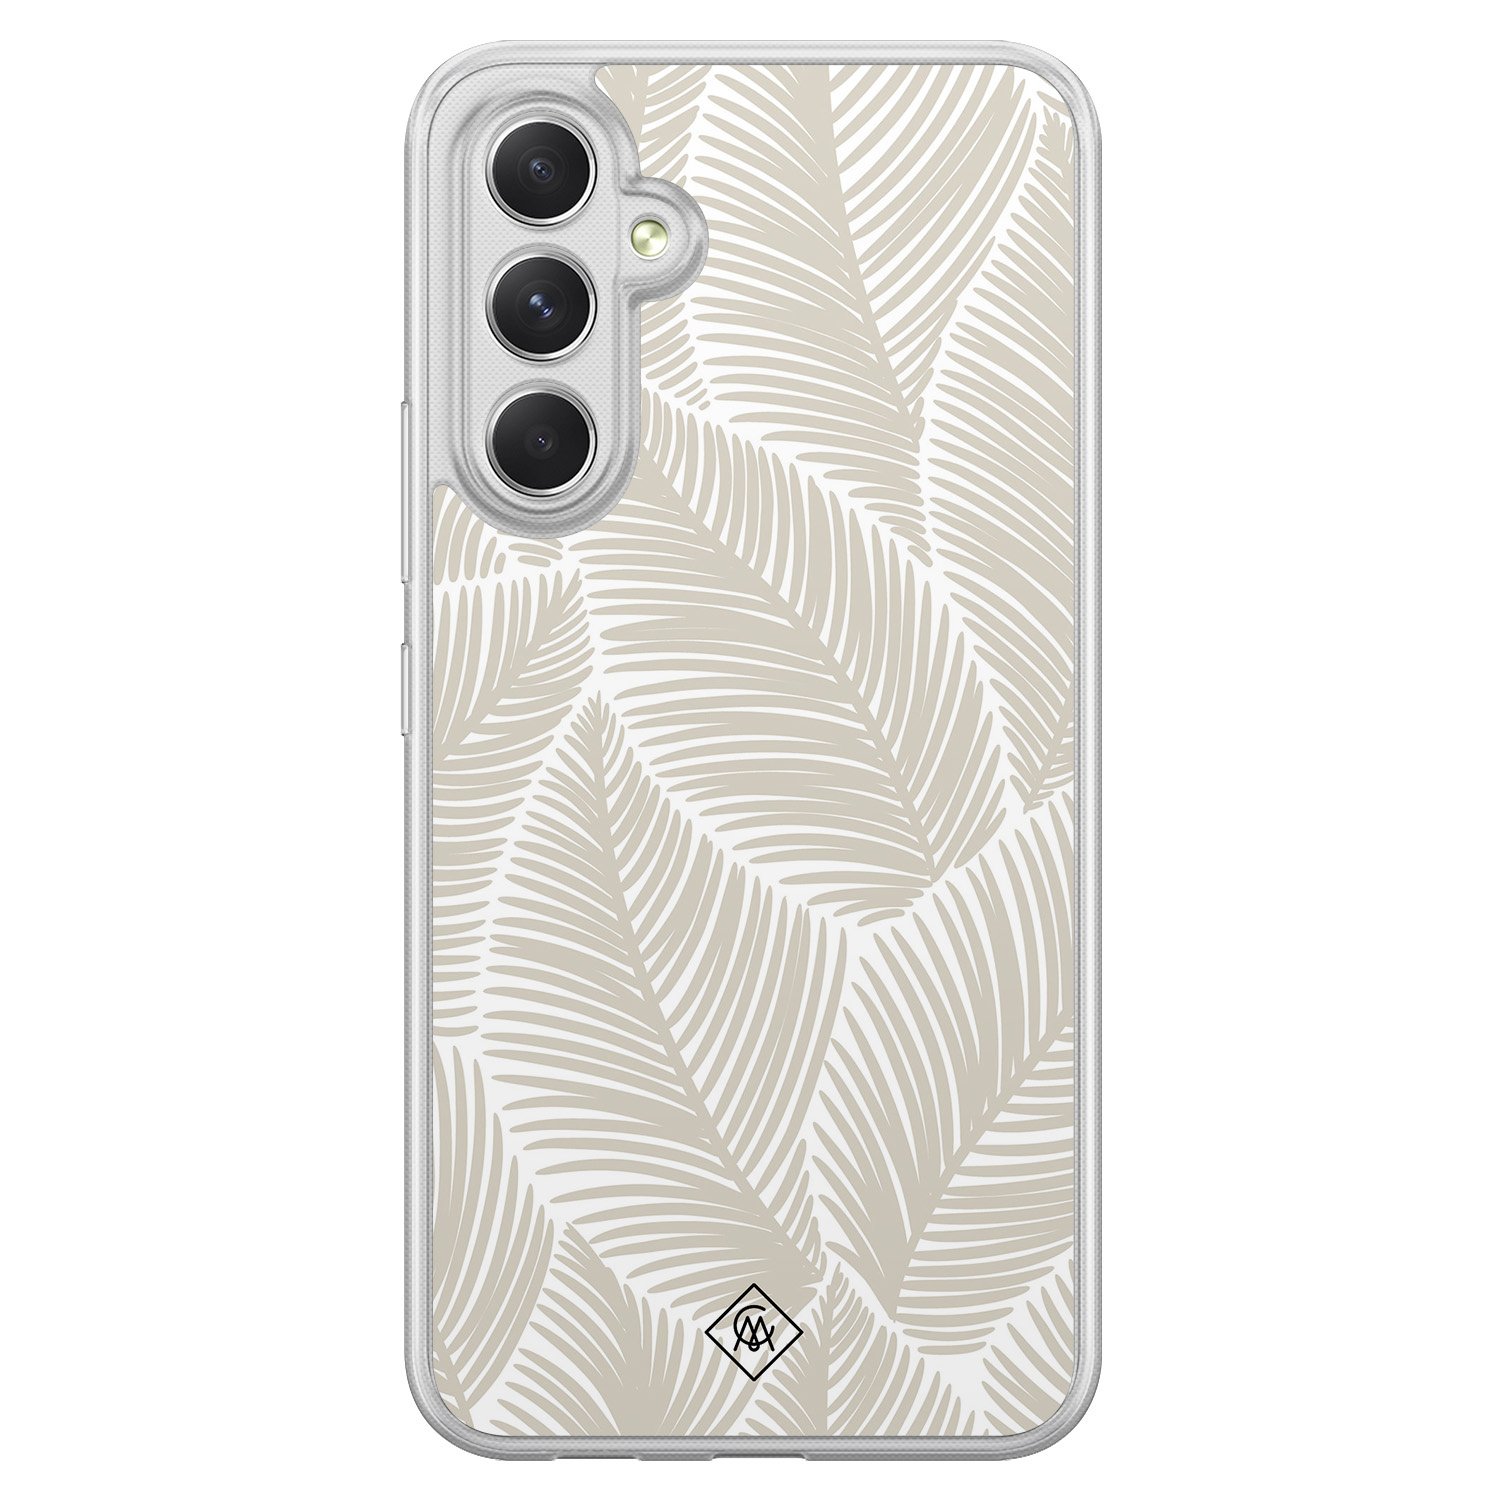 Samsung Galaxy A34 hoesje siliconen - Palmy leaves beige - Casimoda® 2-in-1 case hybride - Schokbestendig - Natuur - Verhoogde randen - Bruin/beige, Transparant